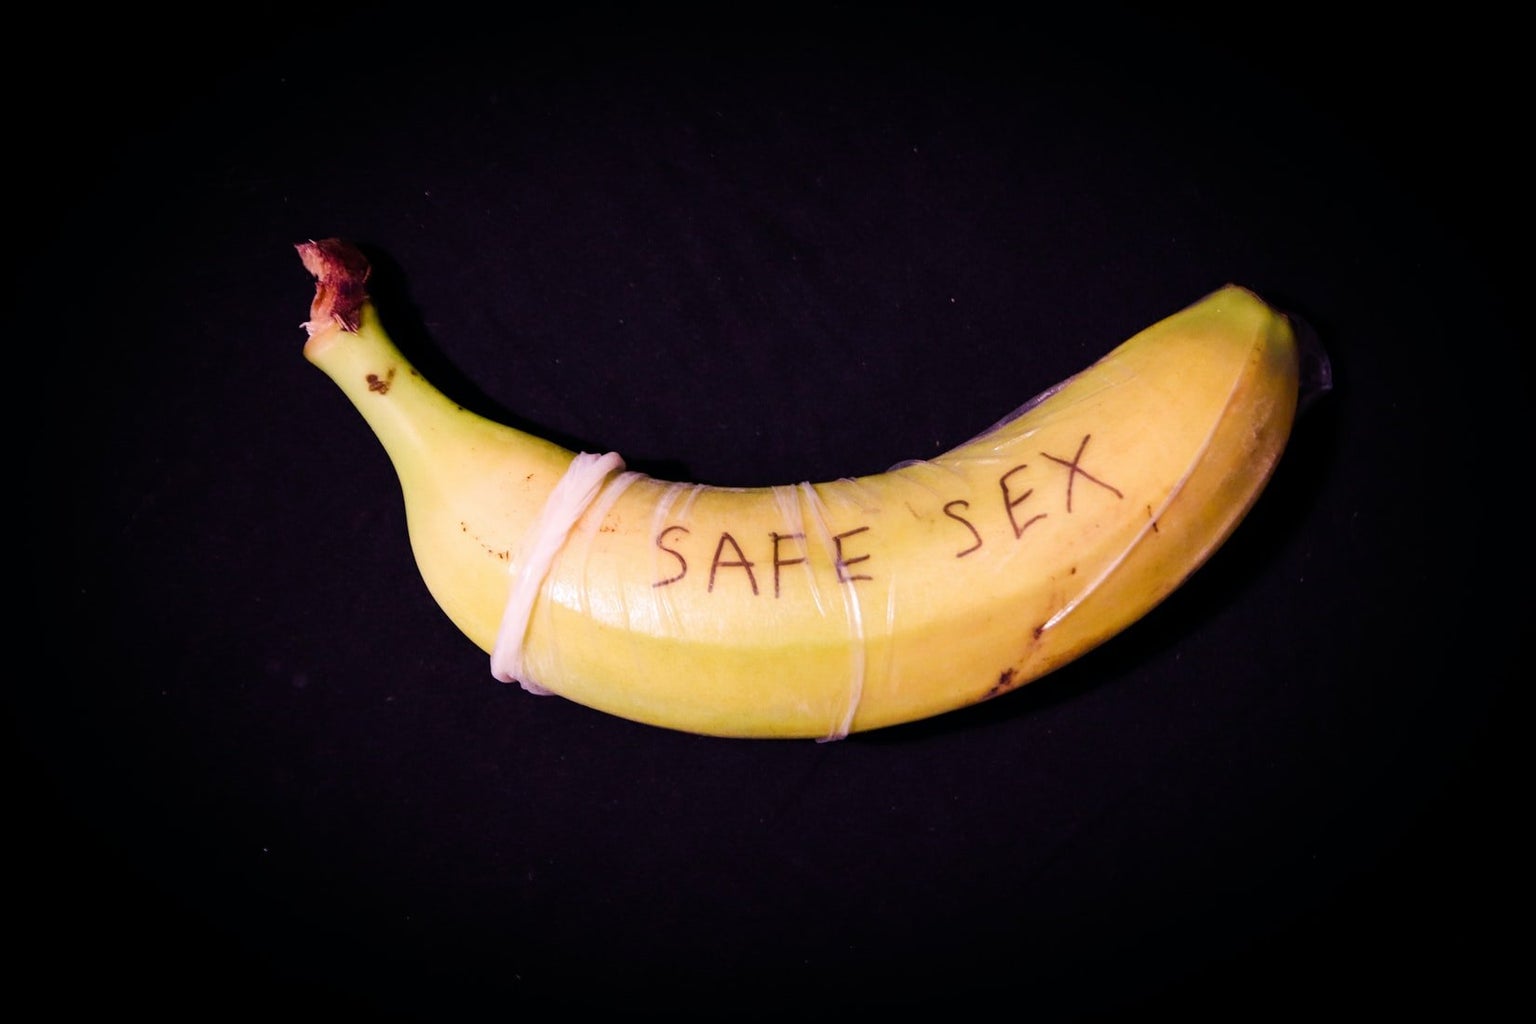 safe sex banana